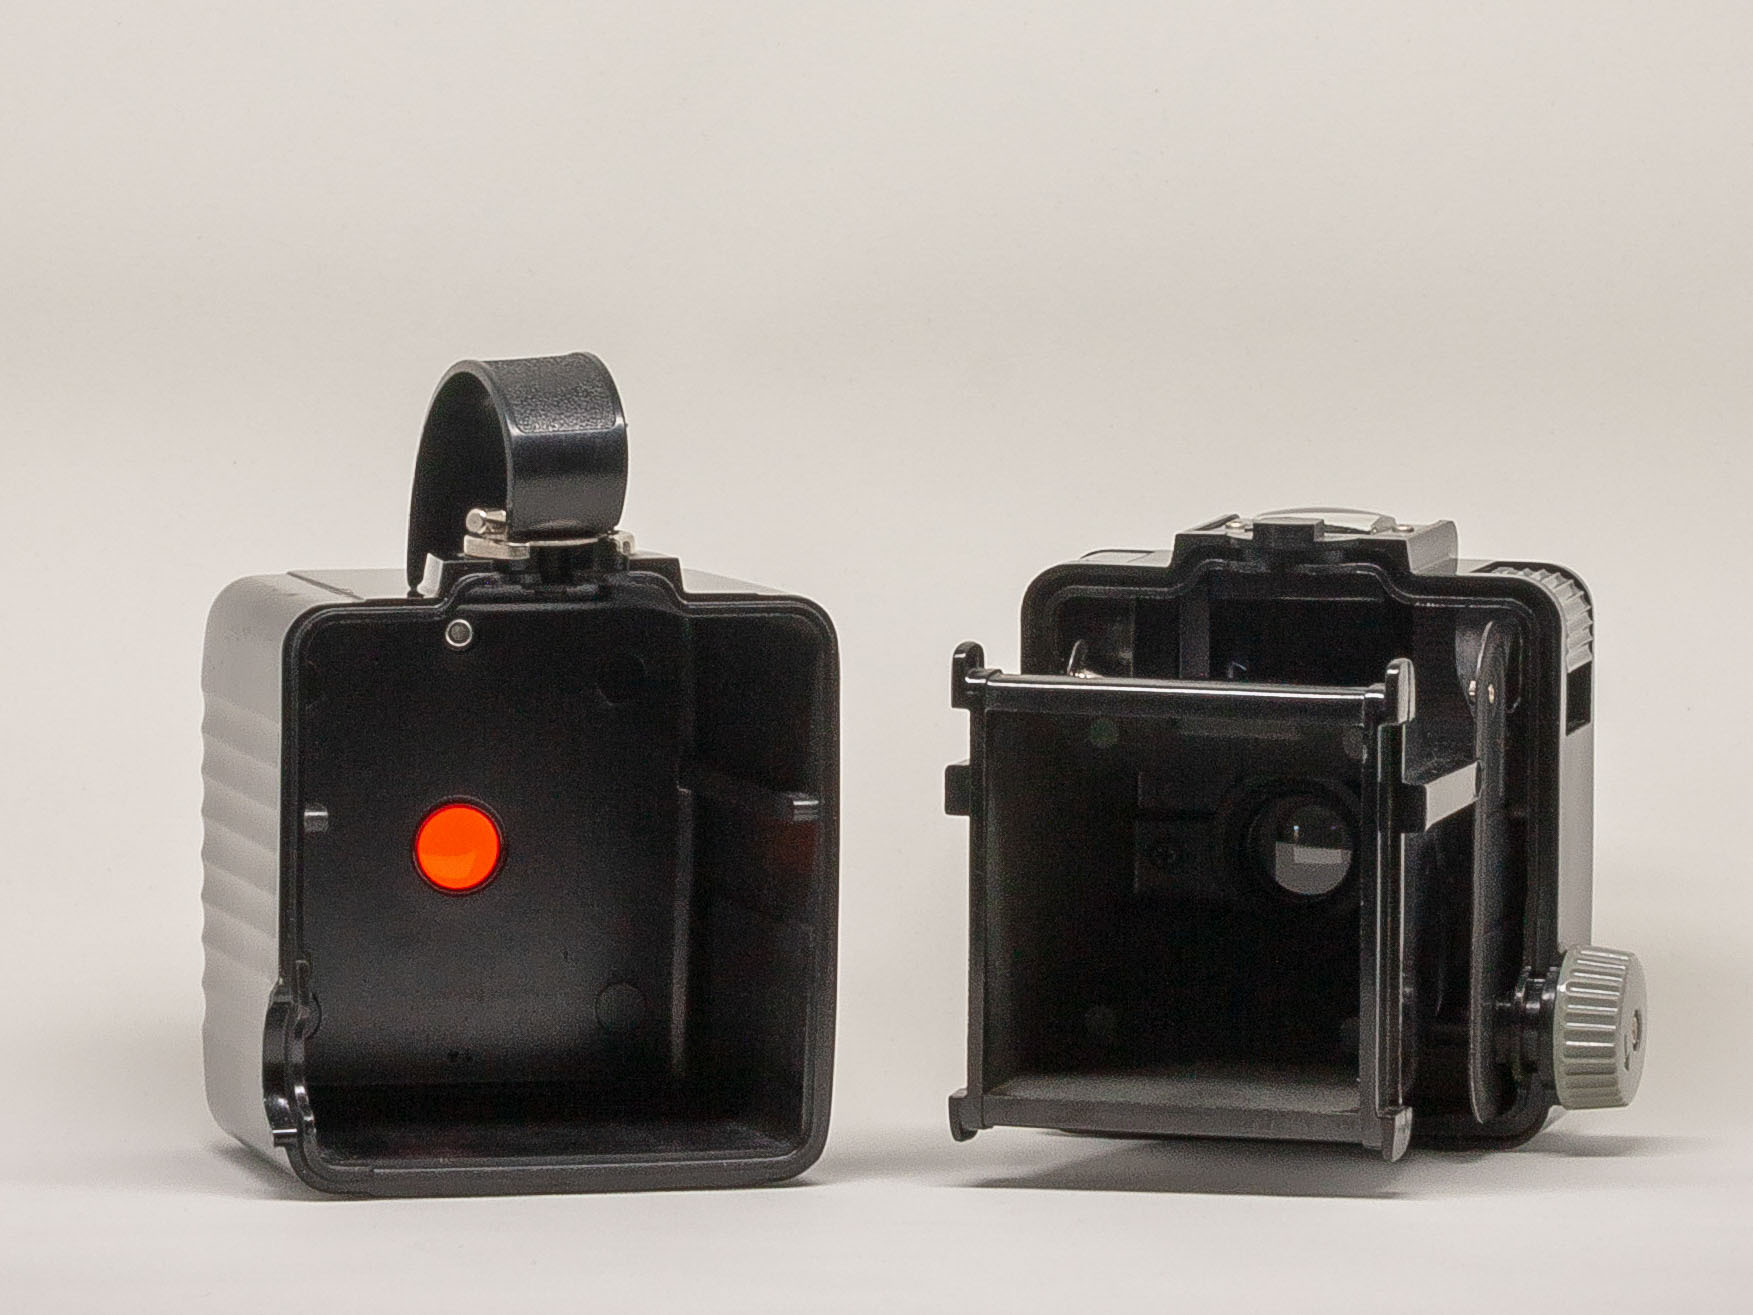 Kodak Brownie Hawkeye Flash Model - Front and back halves